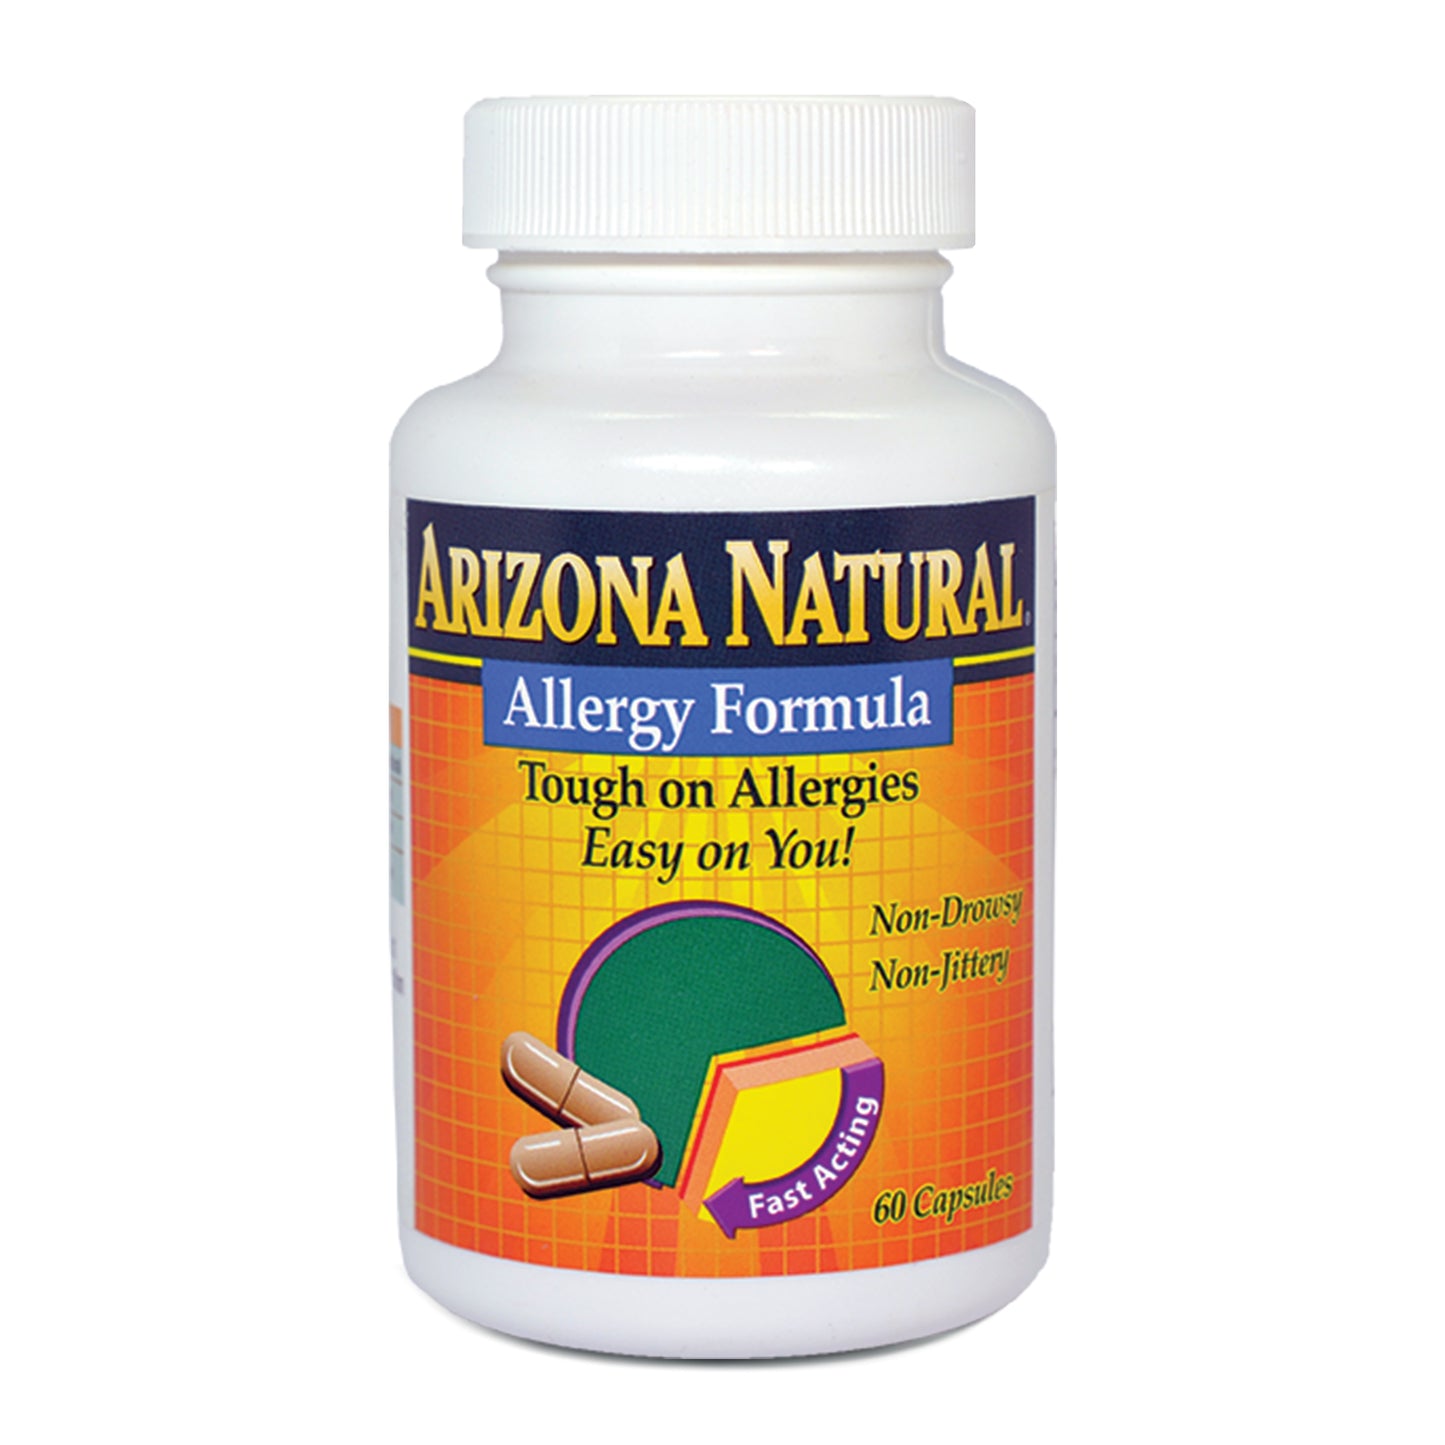 Arizona Natural Allergy Formula